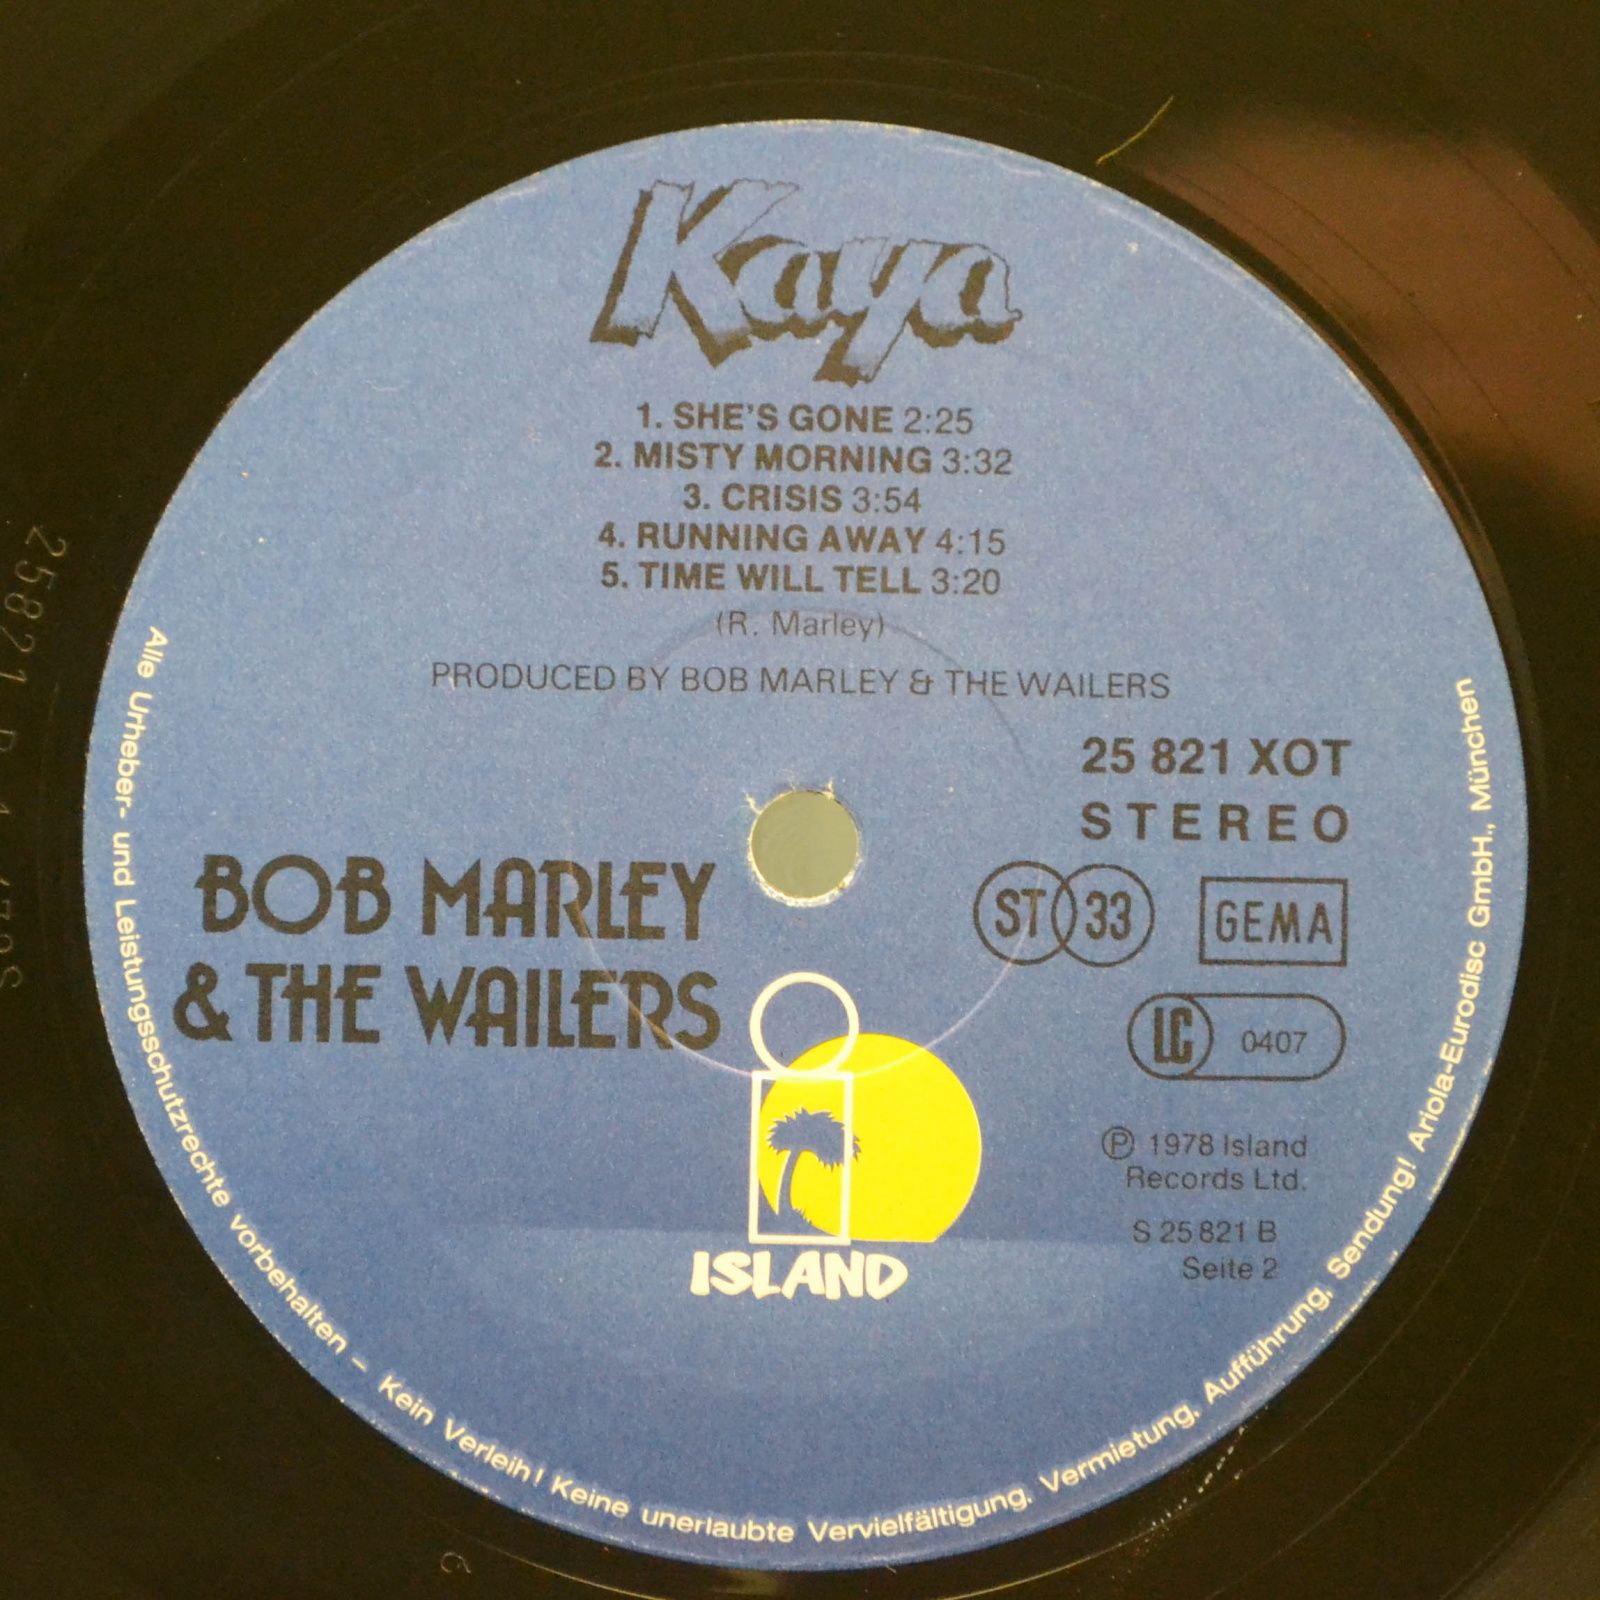 Bob Marley & The Wailers — Kaya, 1978